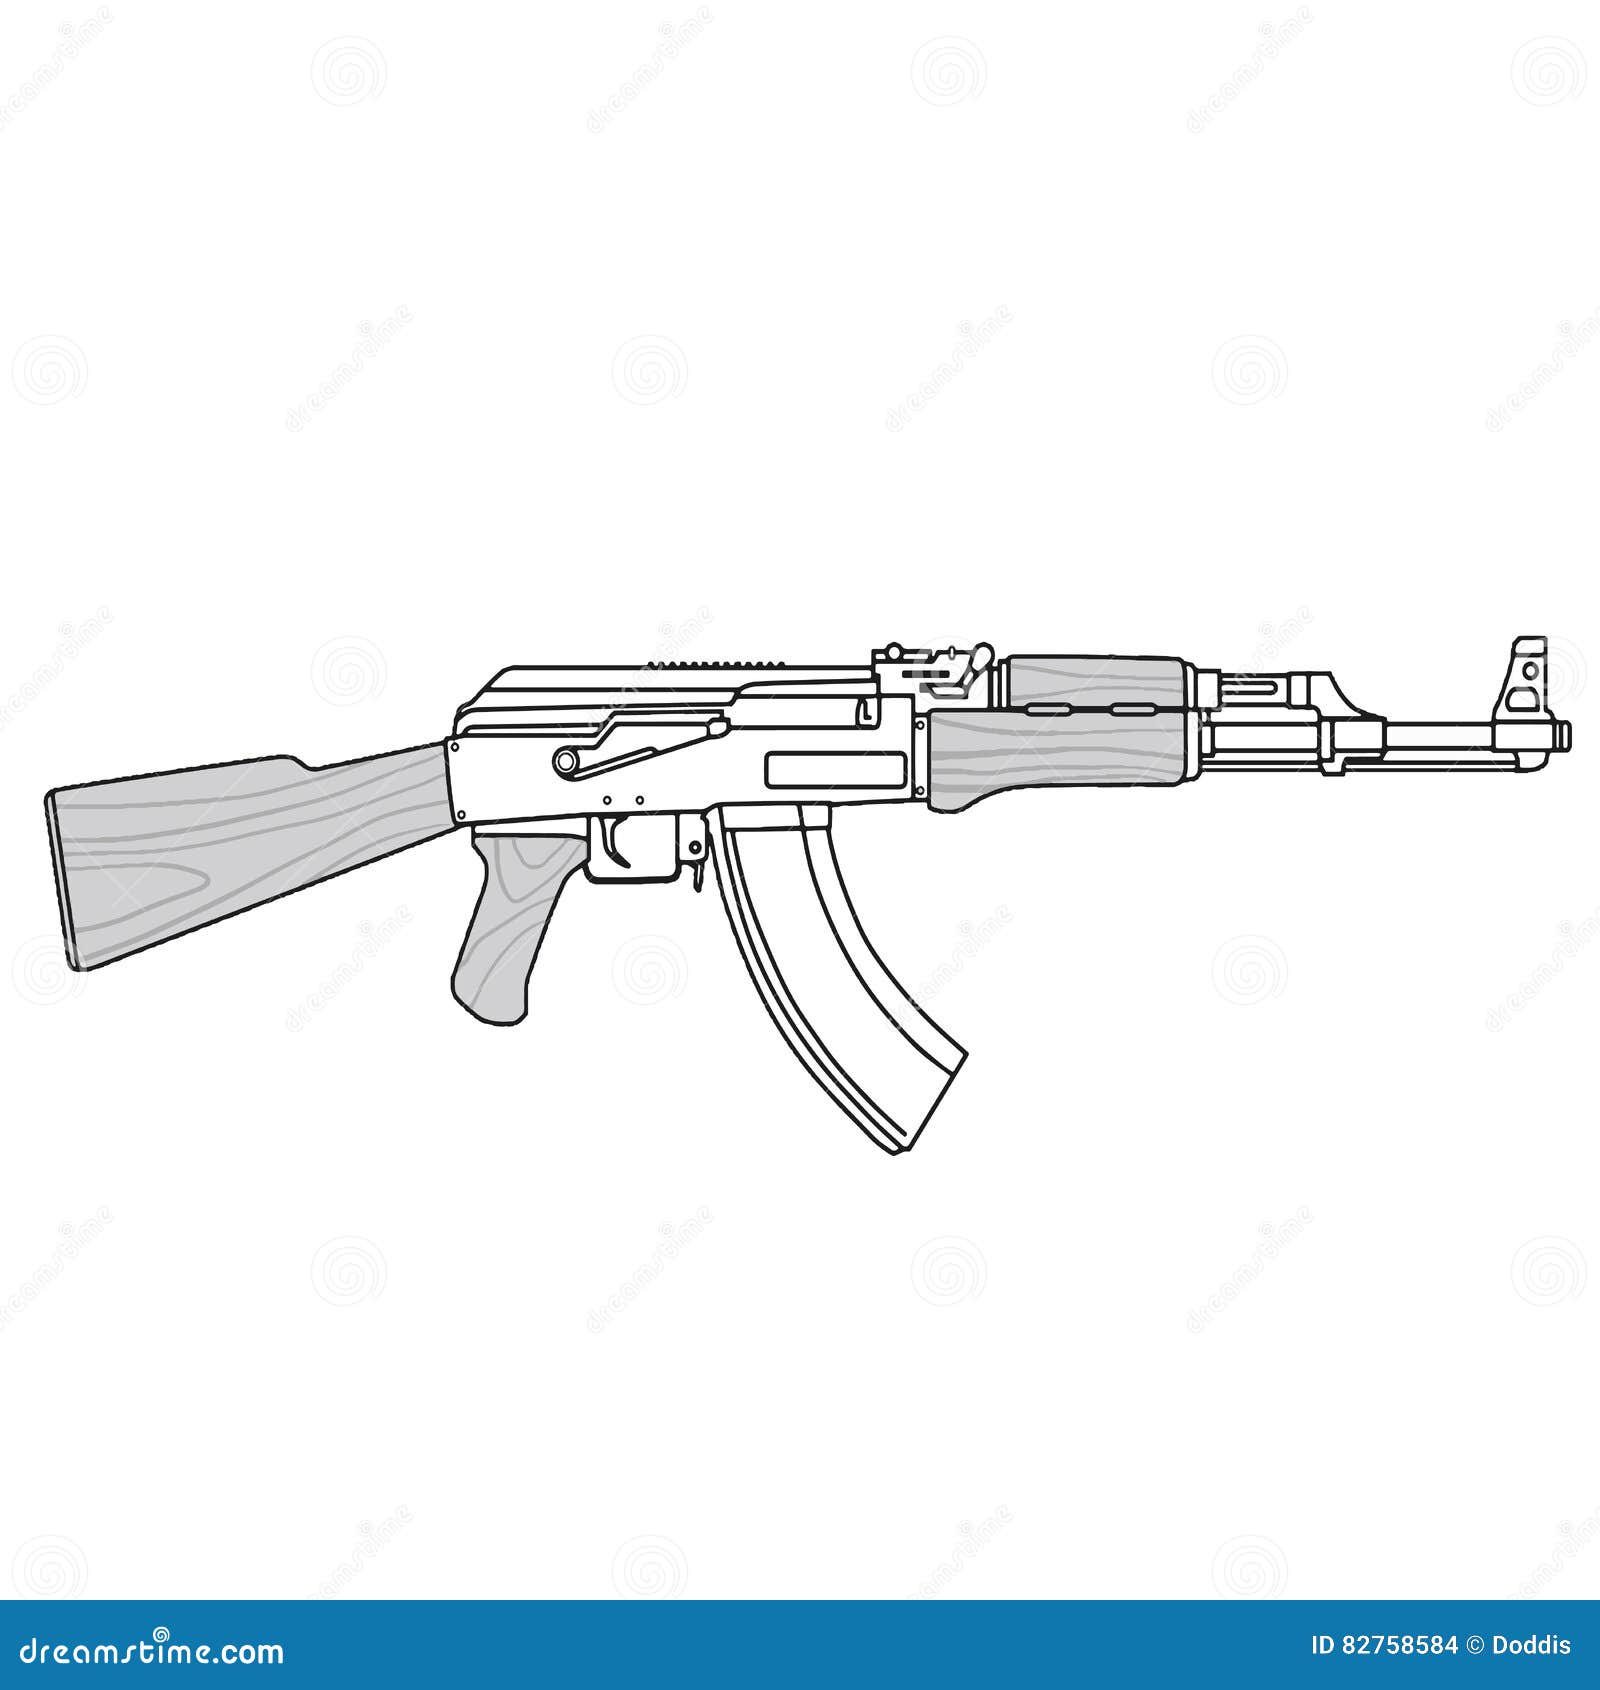 Ak 47 Tattoo Kalashnikov Vector Images 32